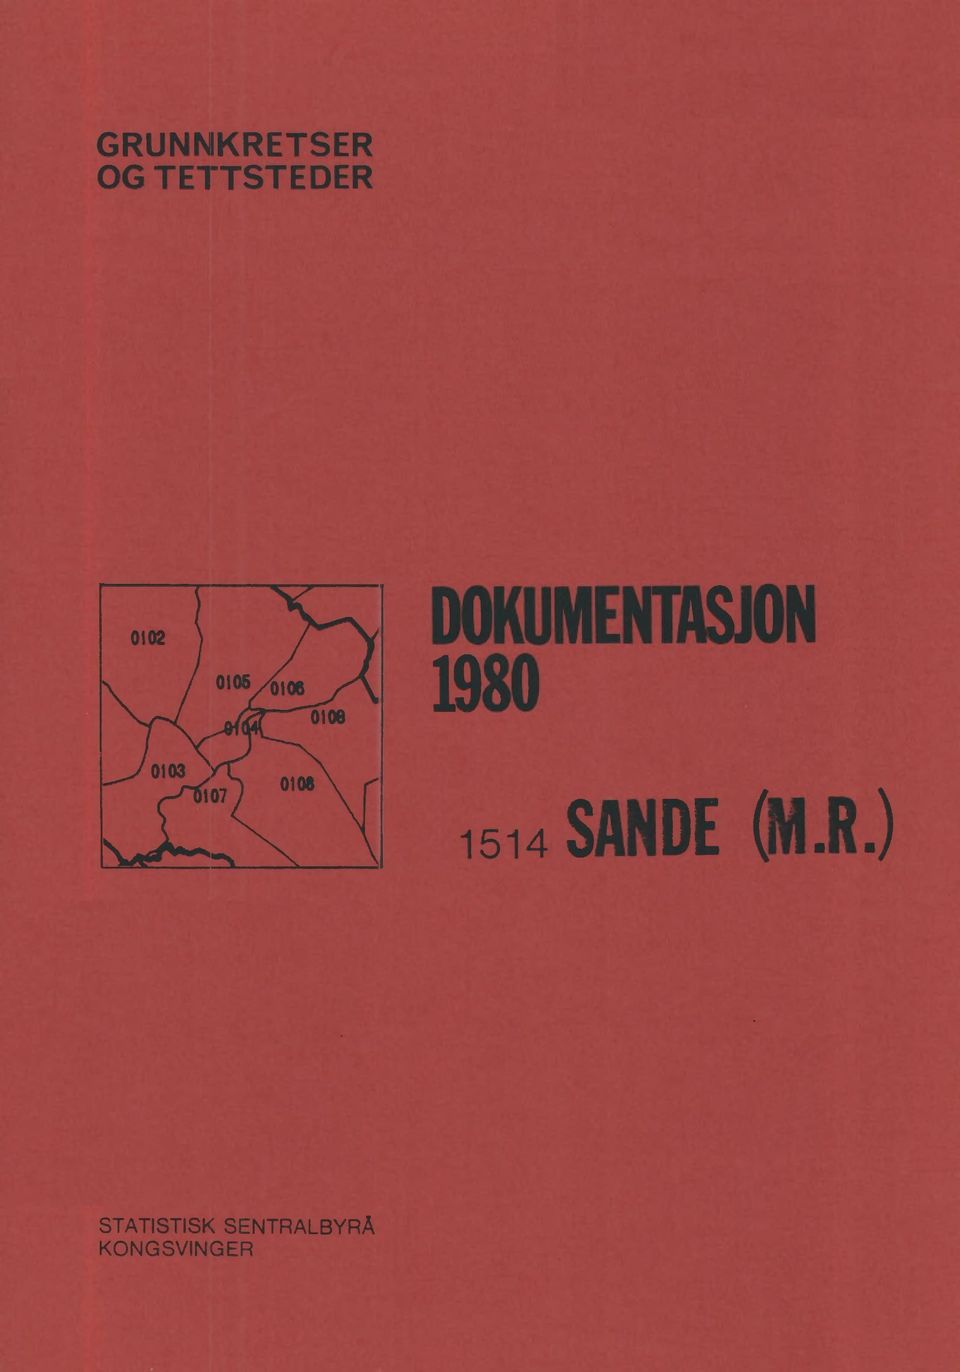 1980 1514 SANDE (M.R.